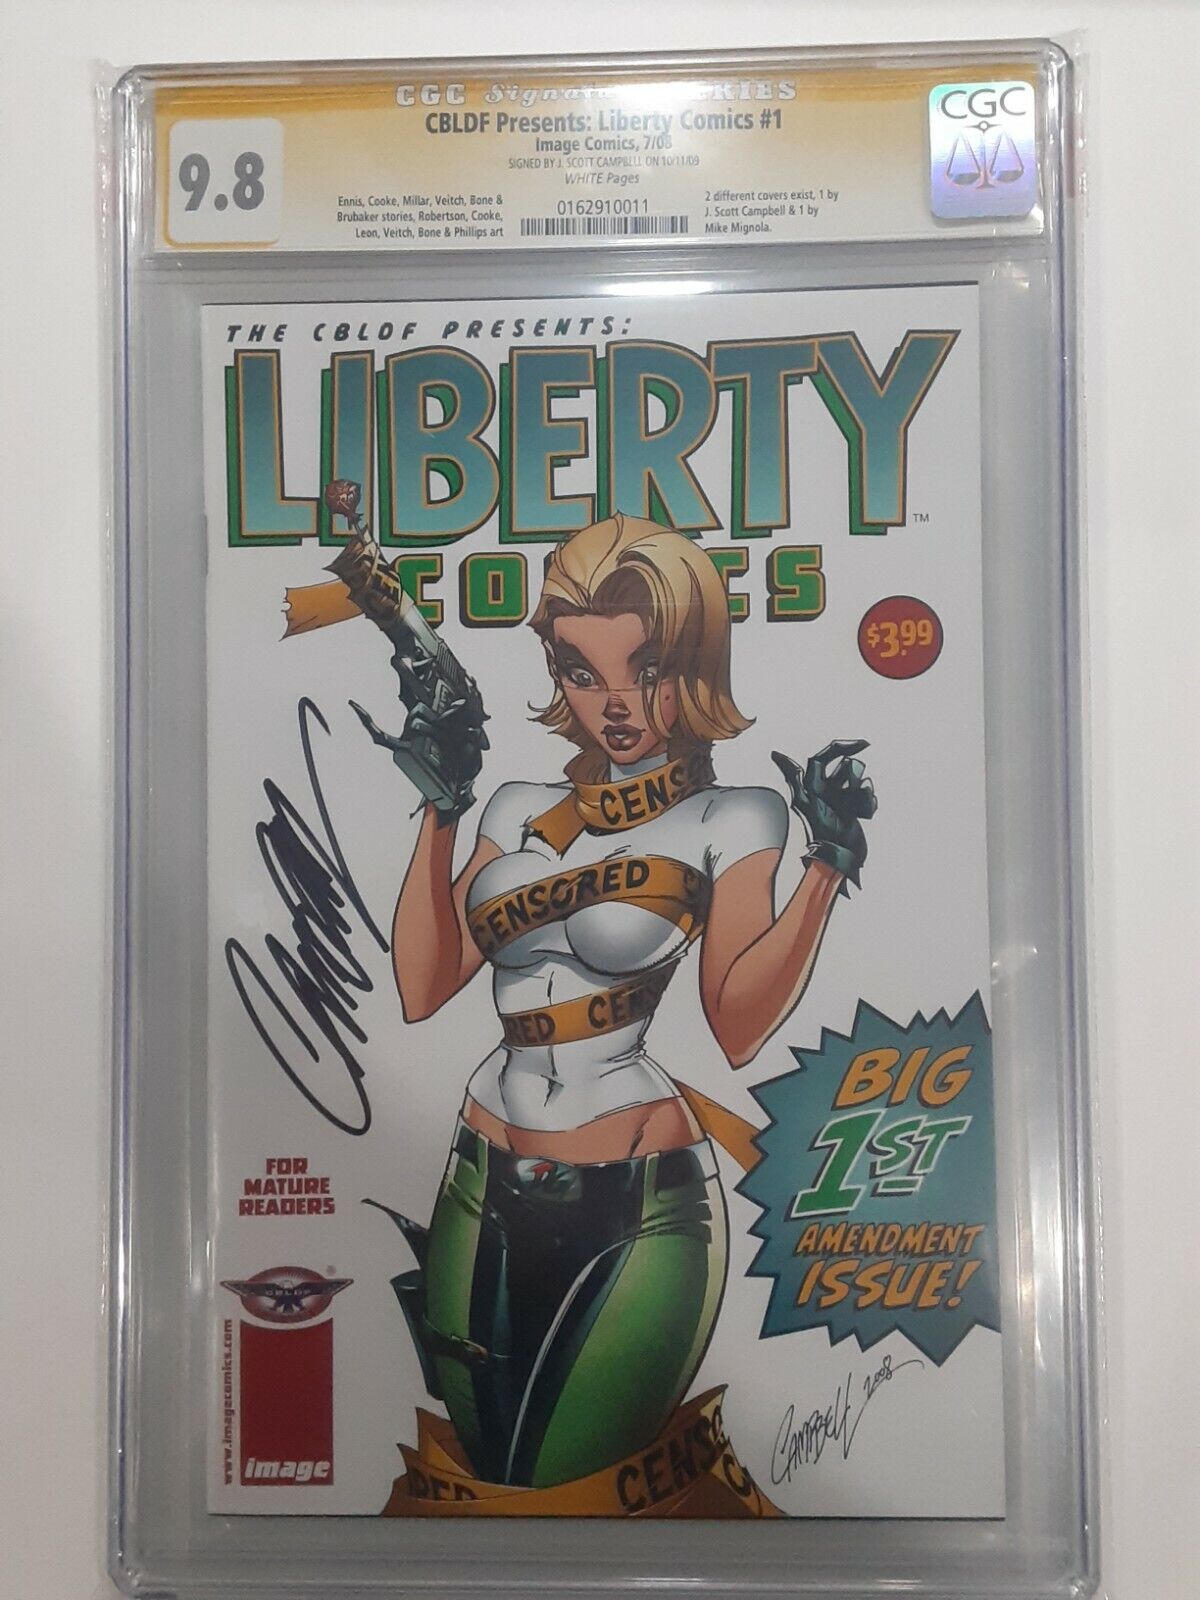 CBLDF Presents Liberty Comics #1 G.Ennis CGC 9.8 SS Signed by J. Scott Campbell